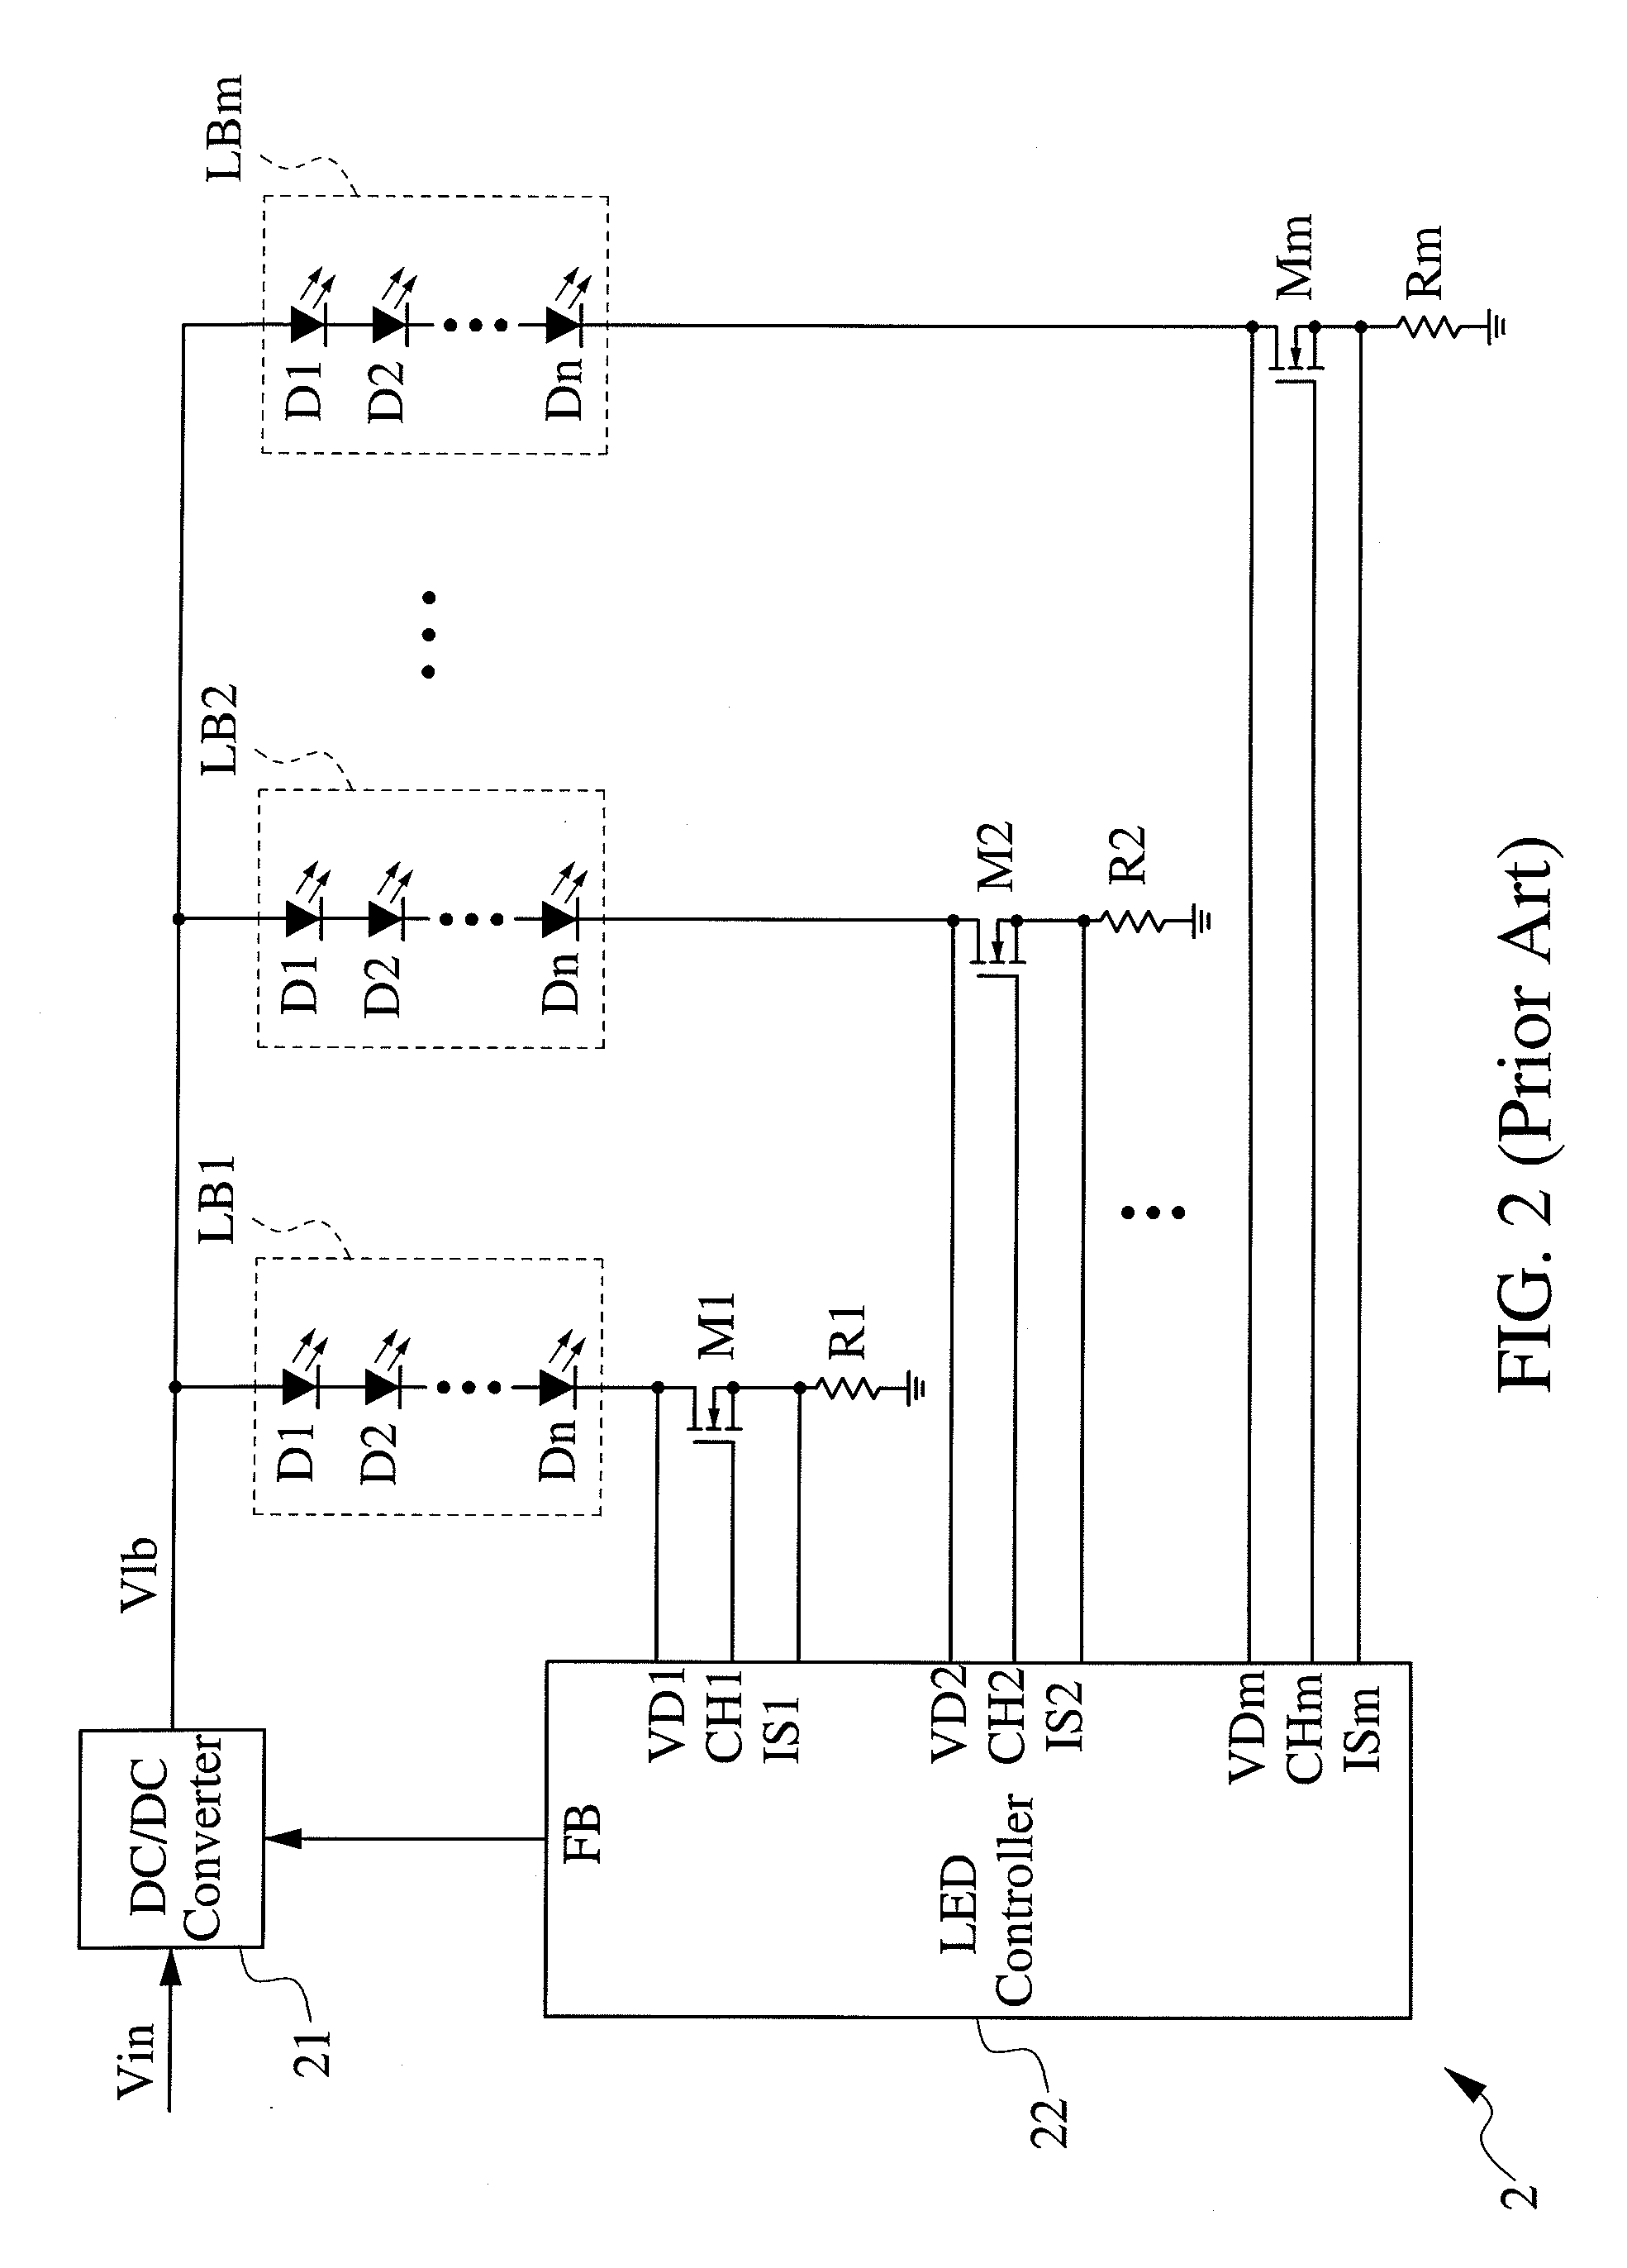 Light-emitting diode (LED) driving circuit